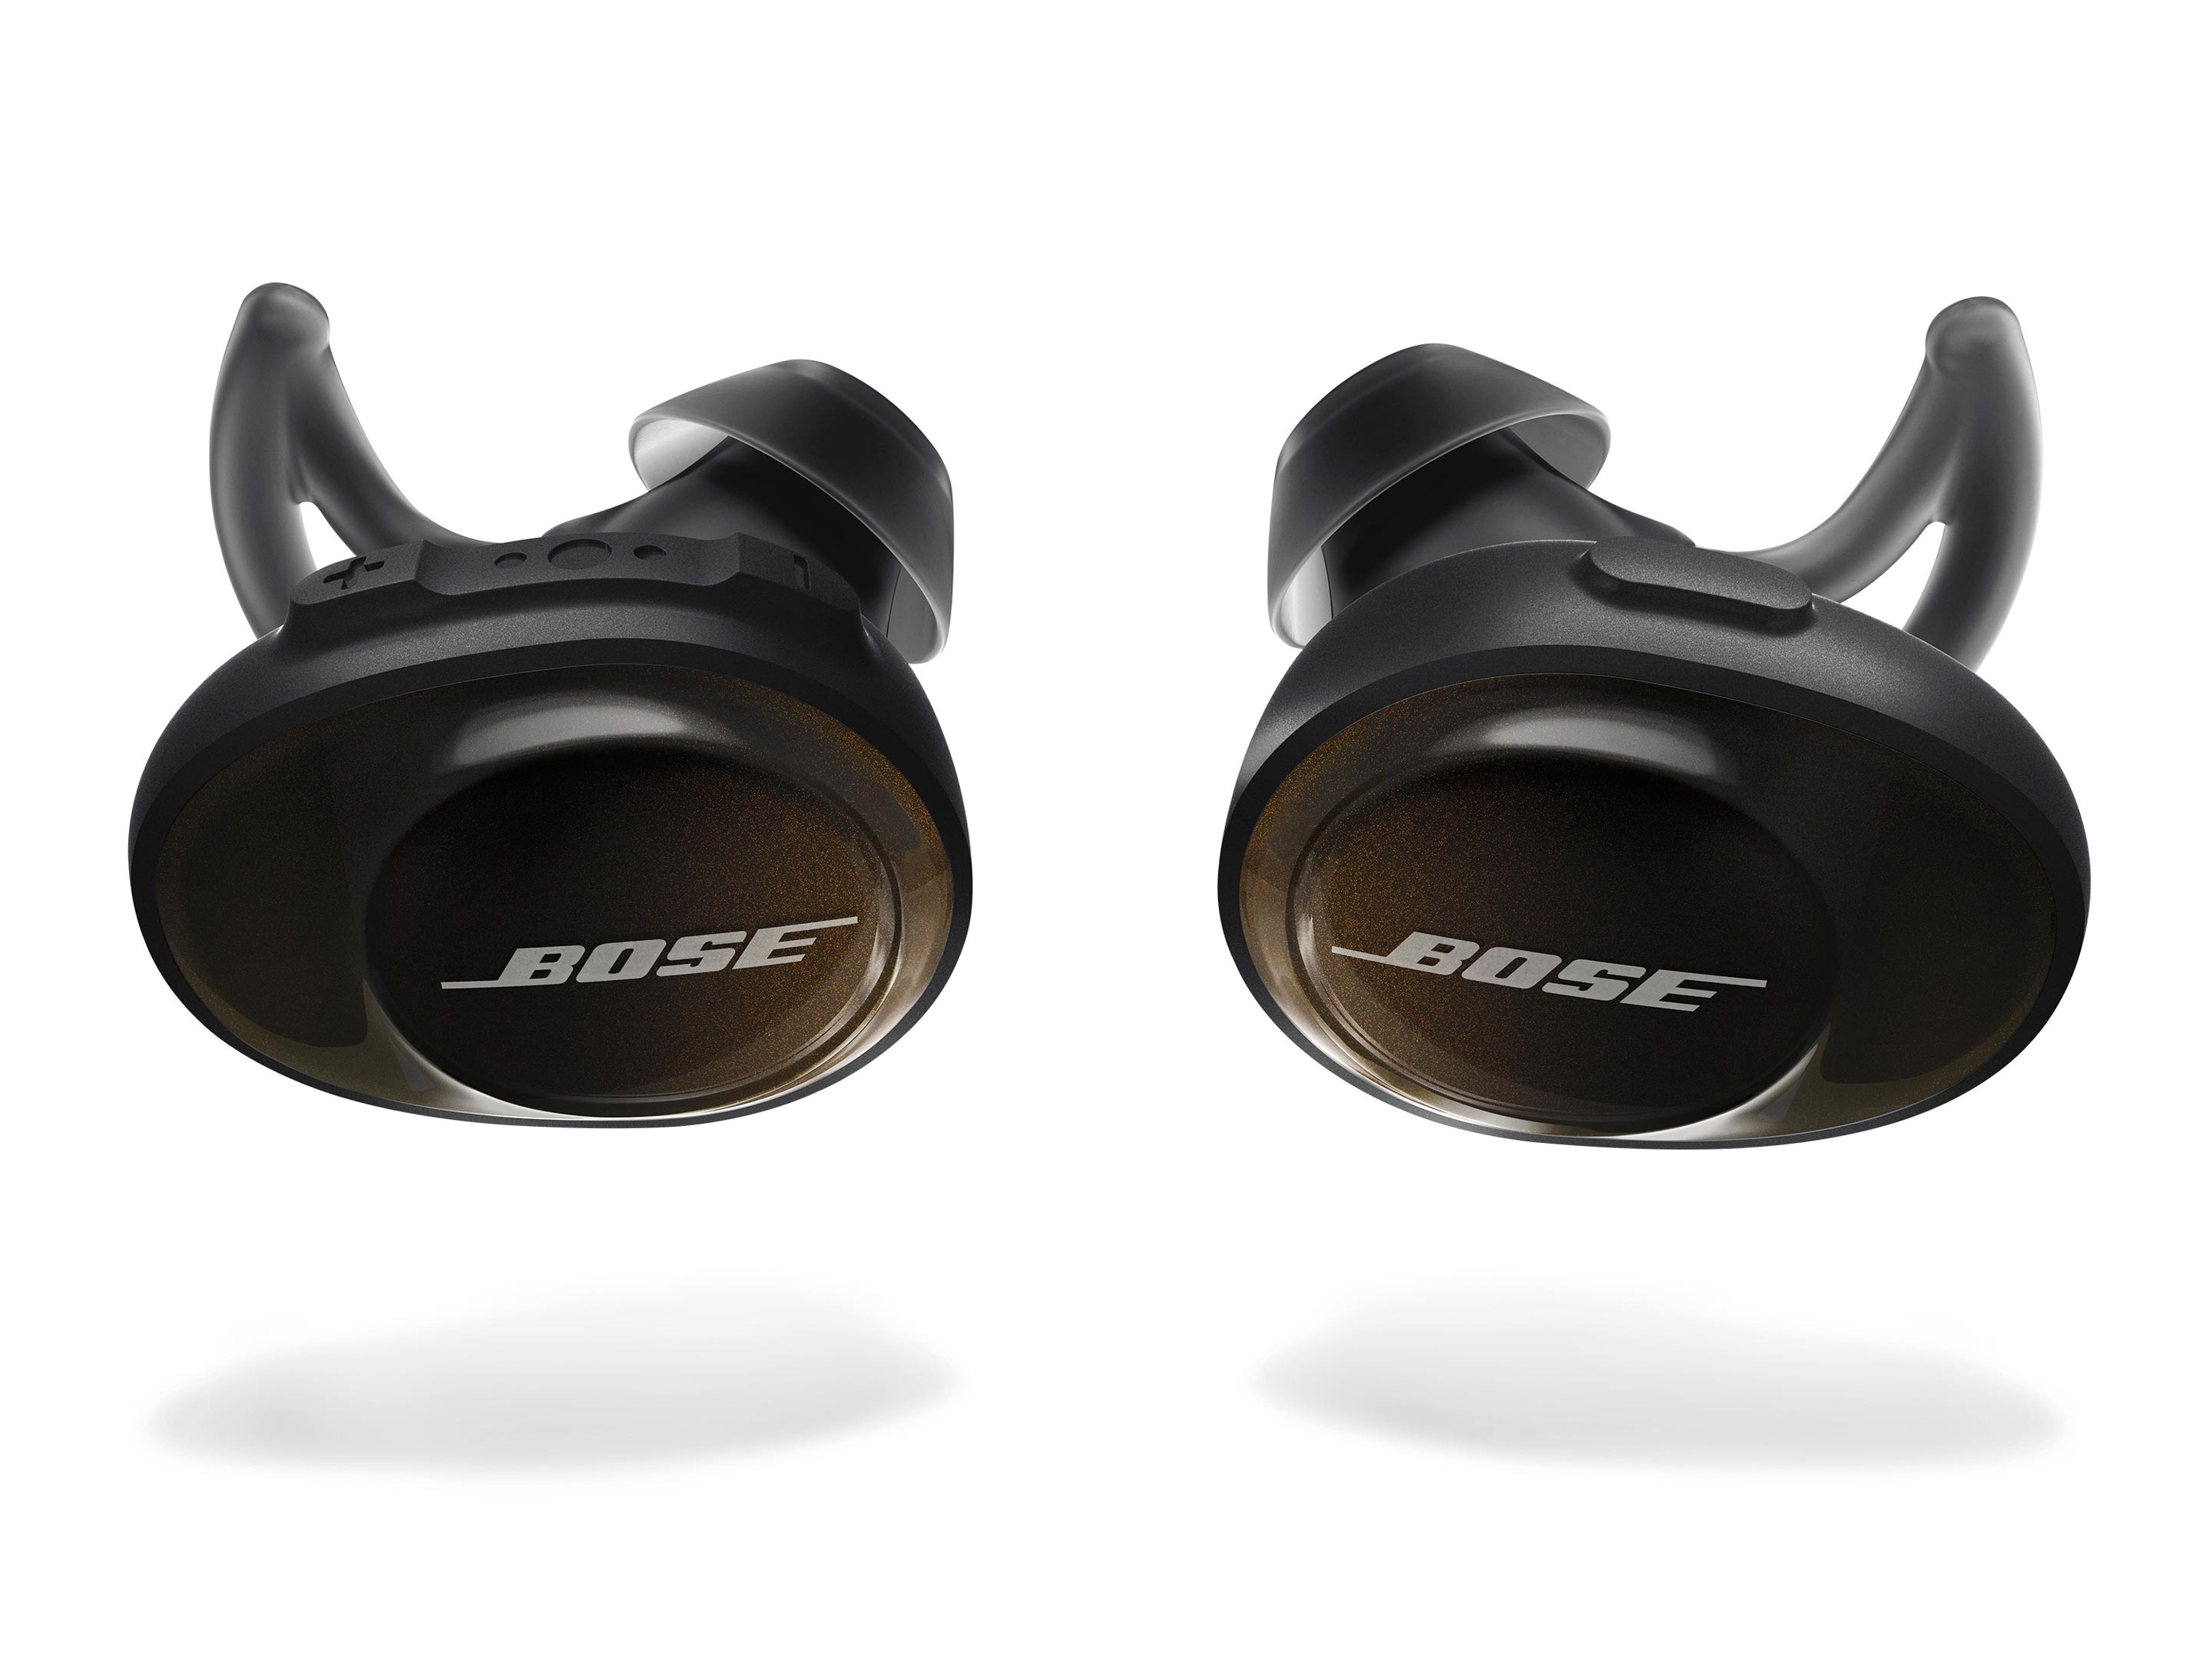 Bose's new SoundSport Free wireless headphones